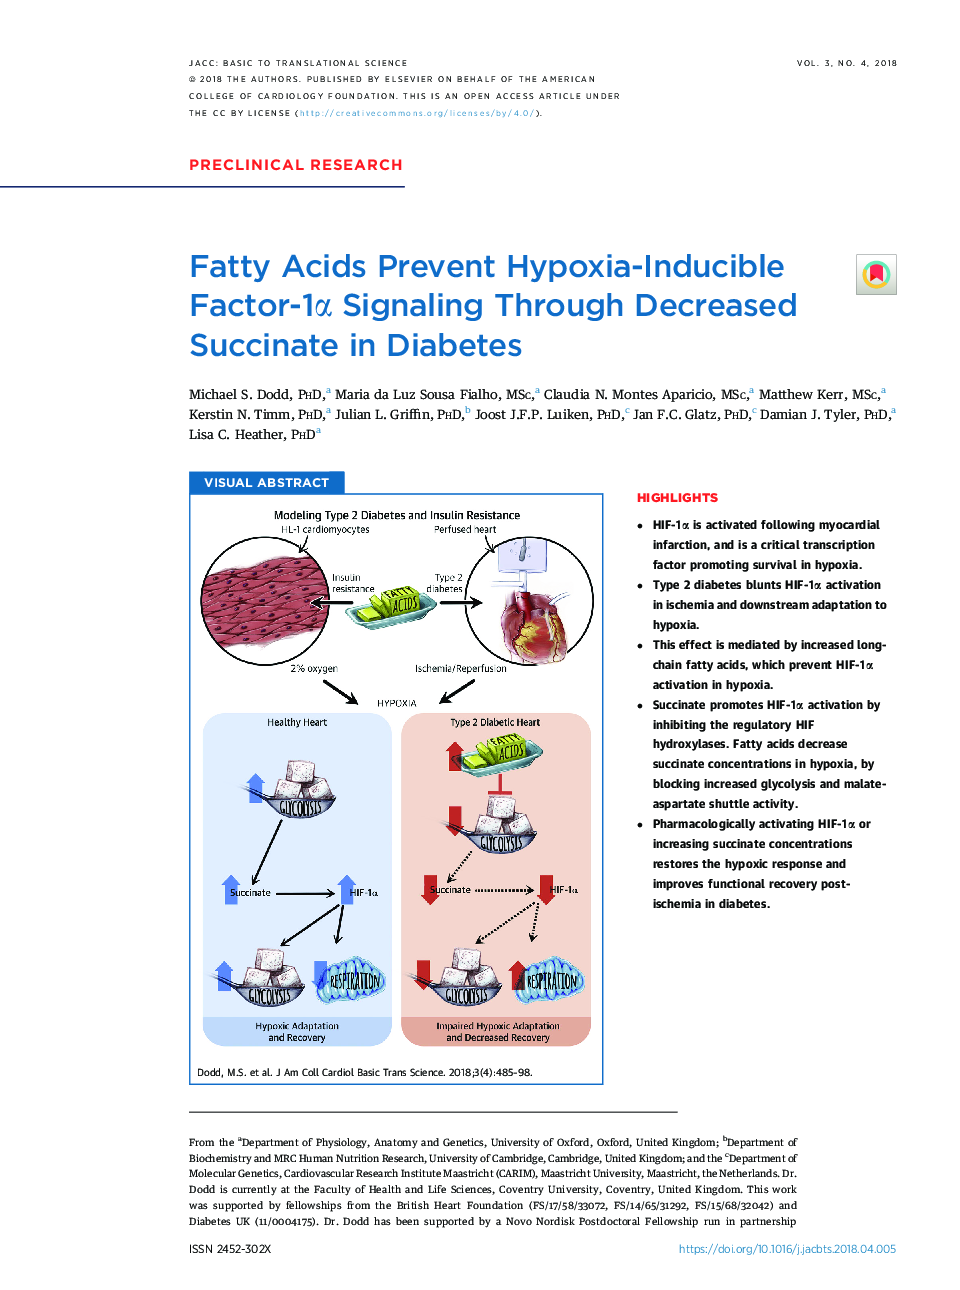 Fatty Acids Prevent Hypoxia-Inducible Factor-1Î± Signaling Through Decreased Succinate in Diabetes